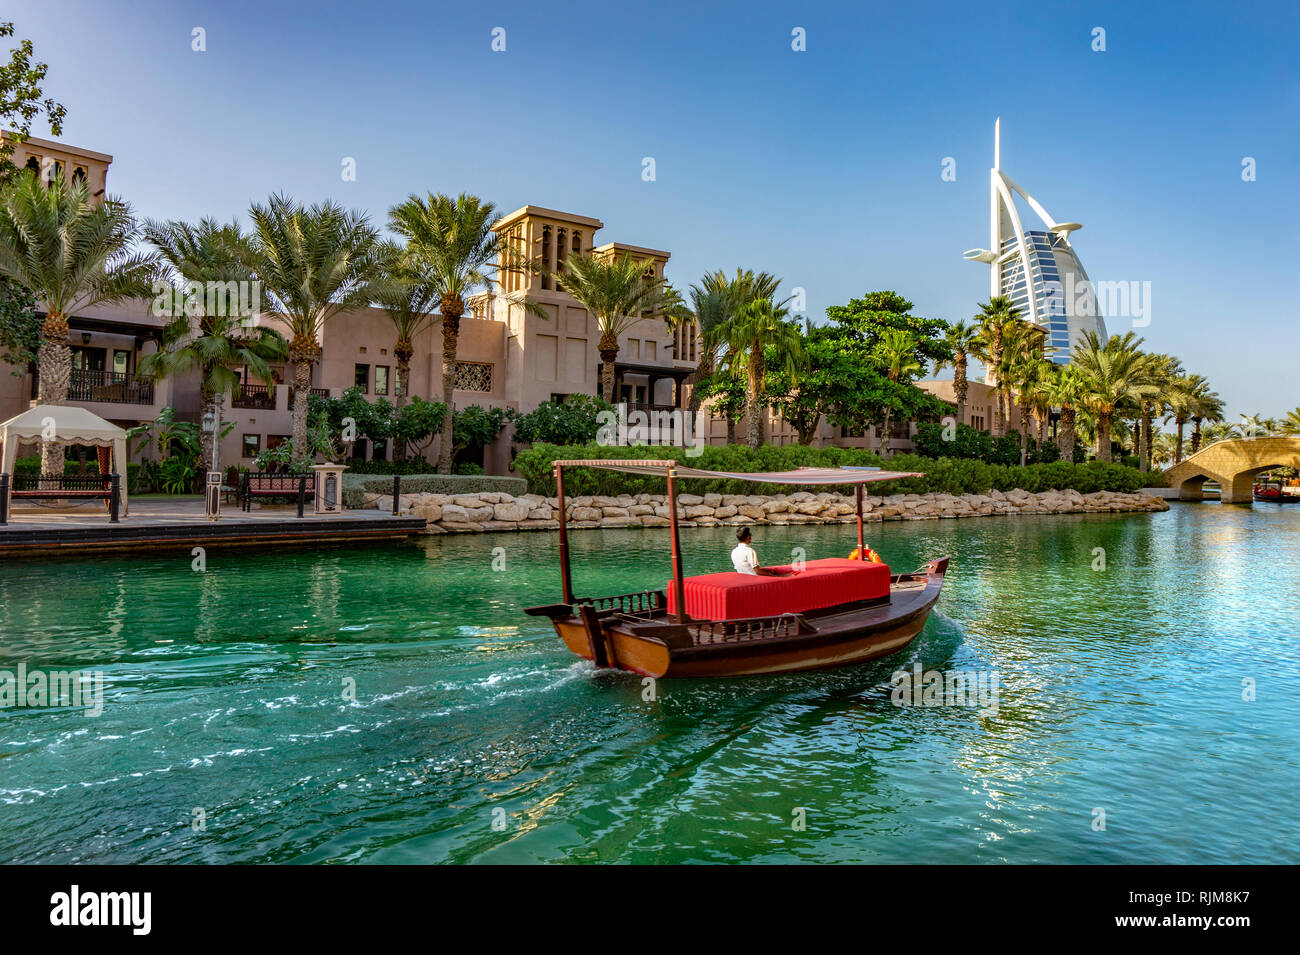 Dubai,UAE / 11. 03. 2018 : abra boat ride in souk medinat jumeirah Stock Photo